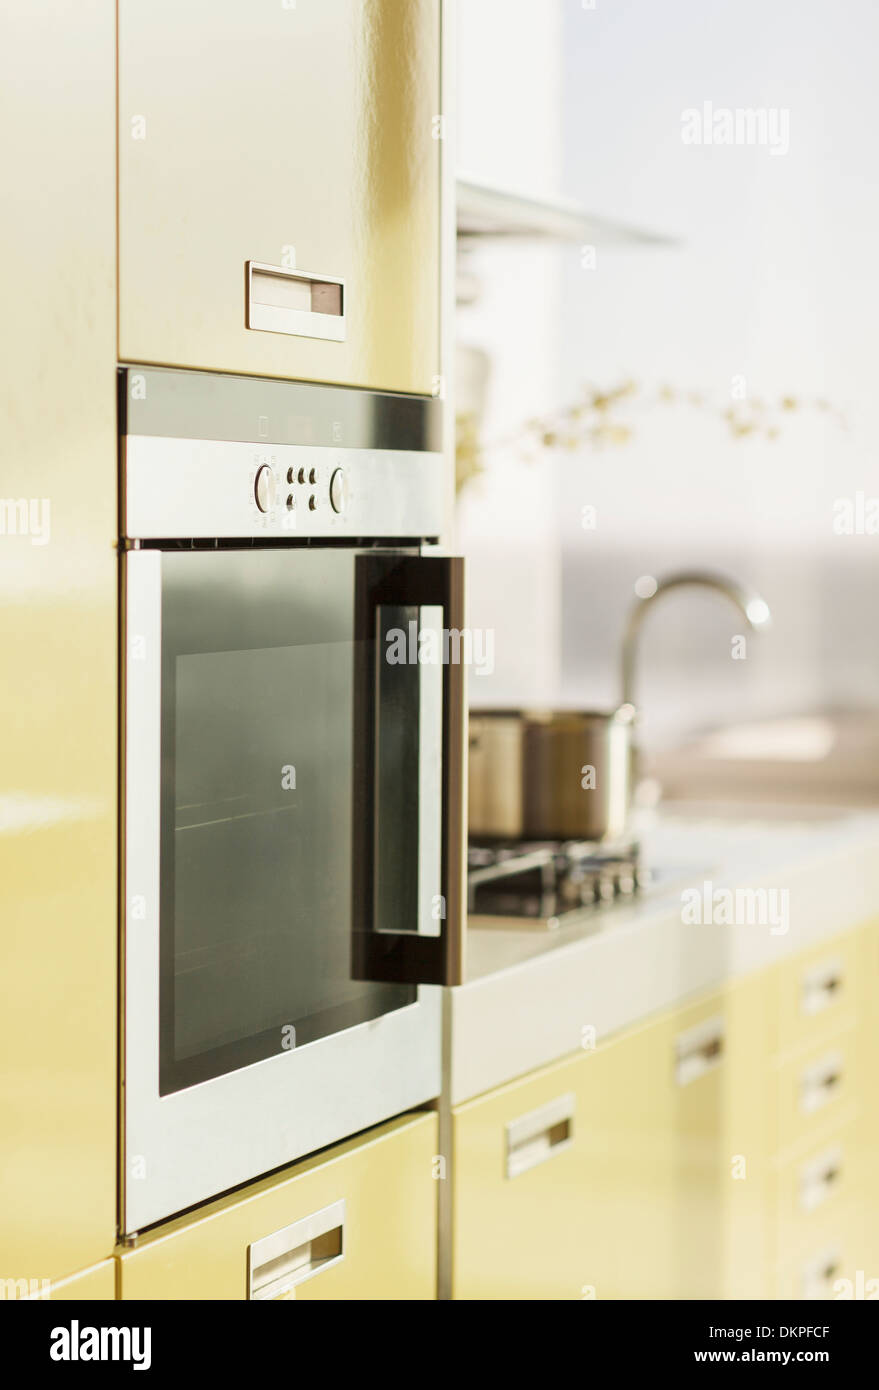 Oven in modern kitchen Stock Photo